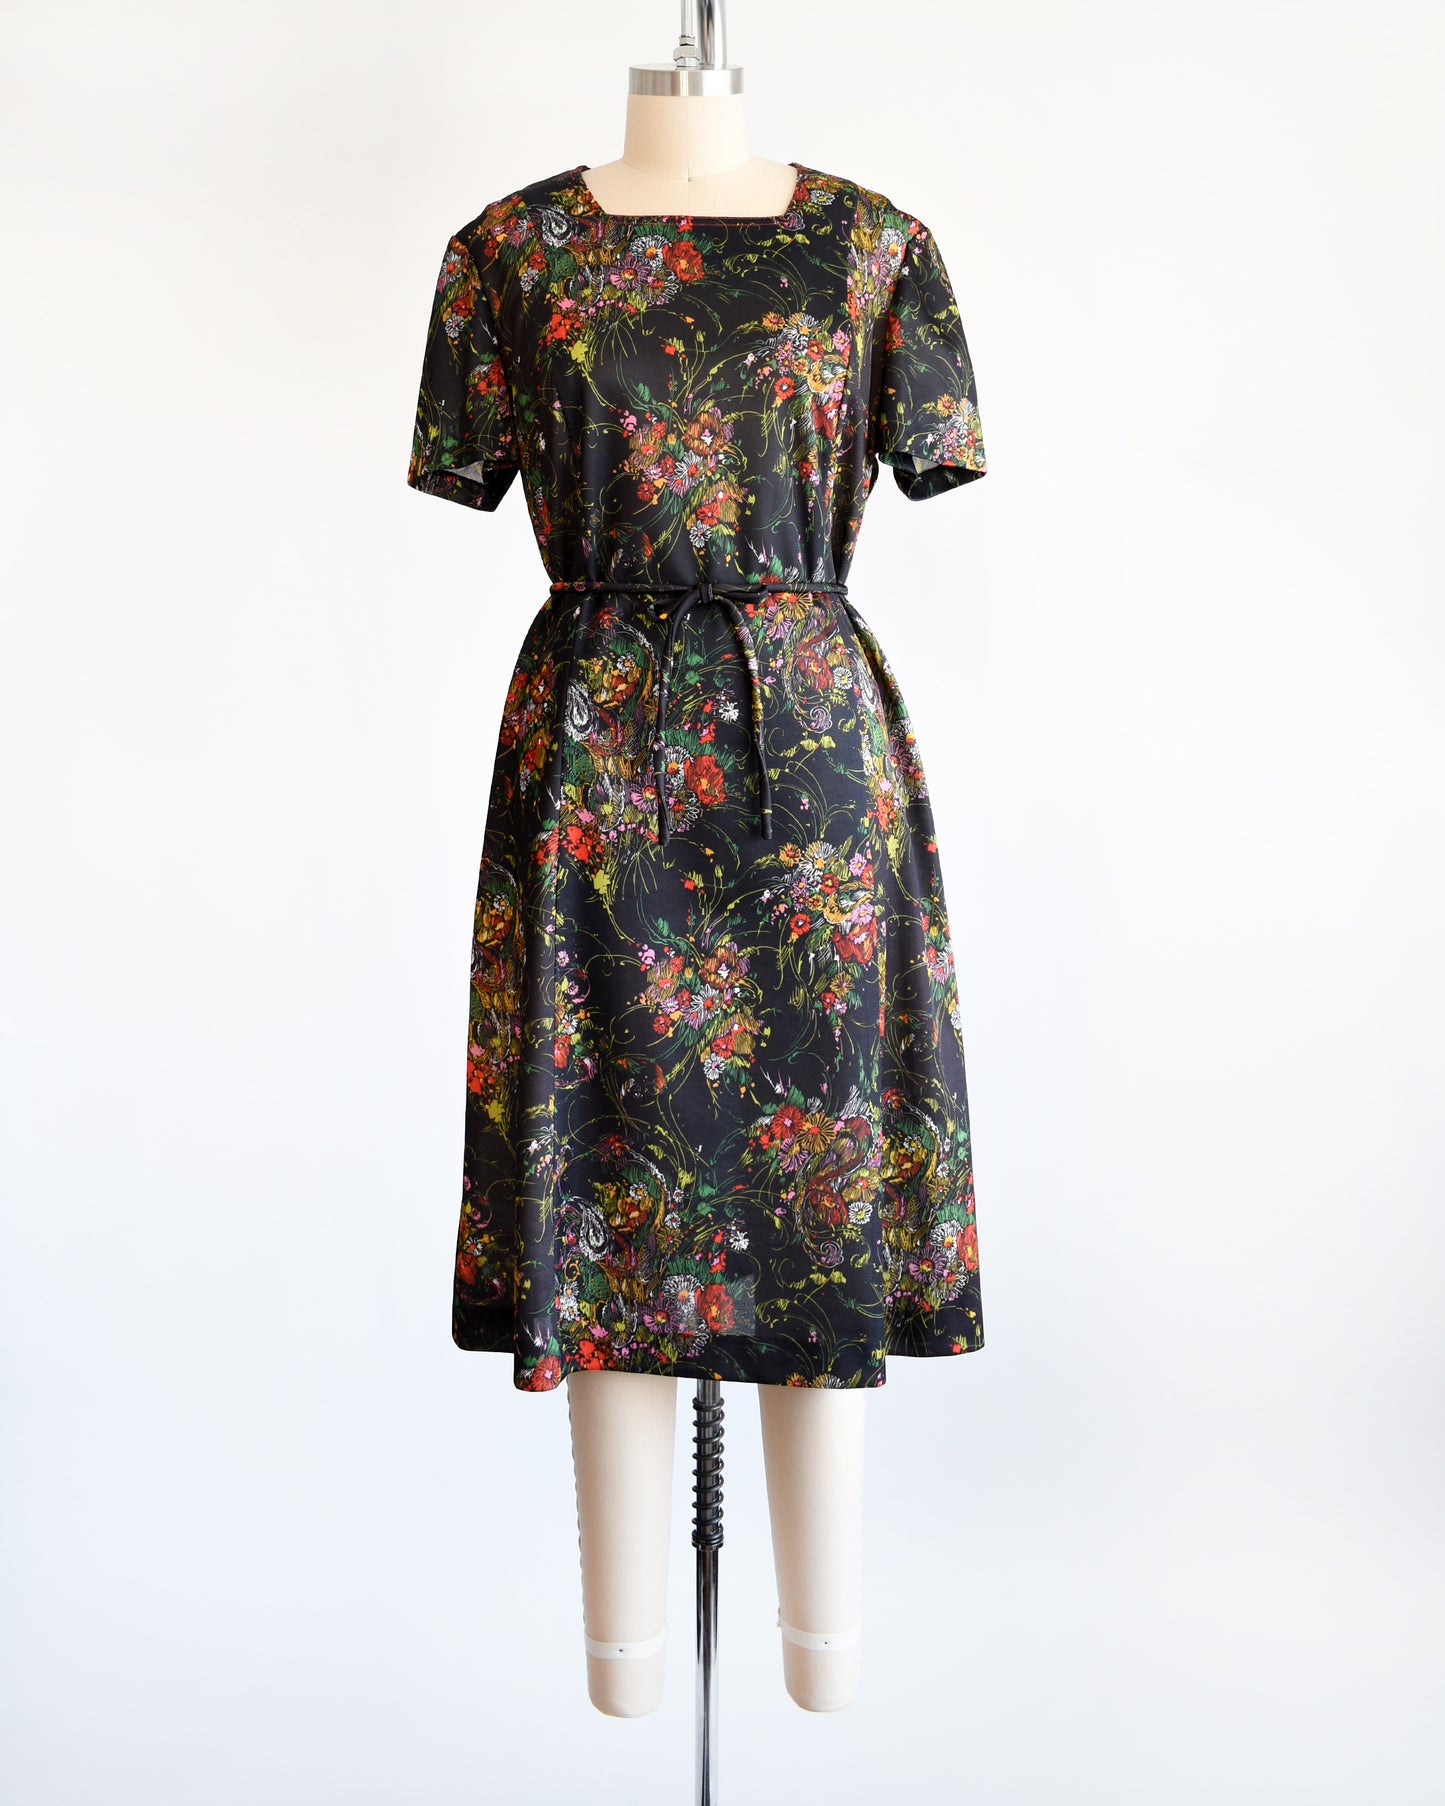 a vintage 1970s black floral dress set that comes with a dress and belt